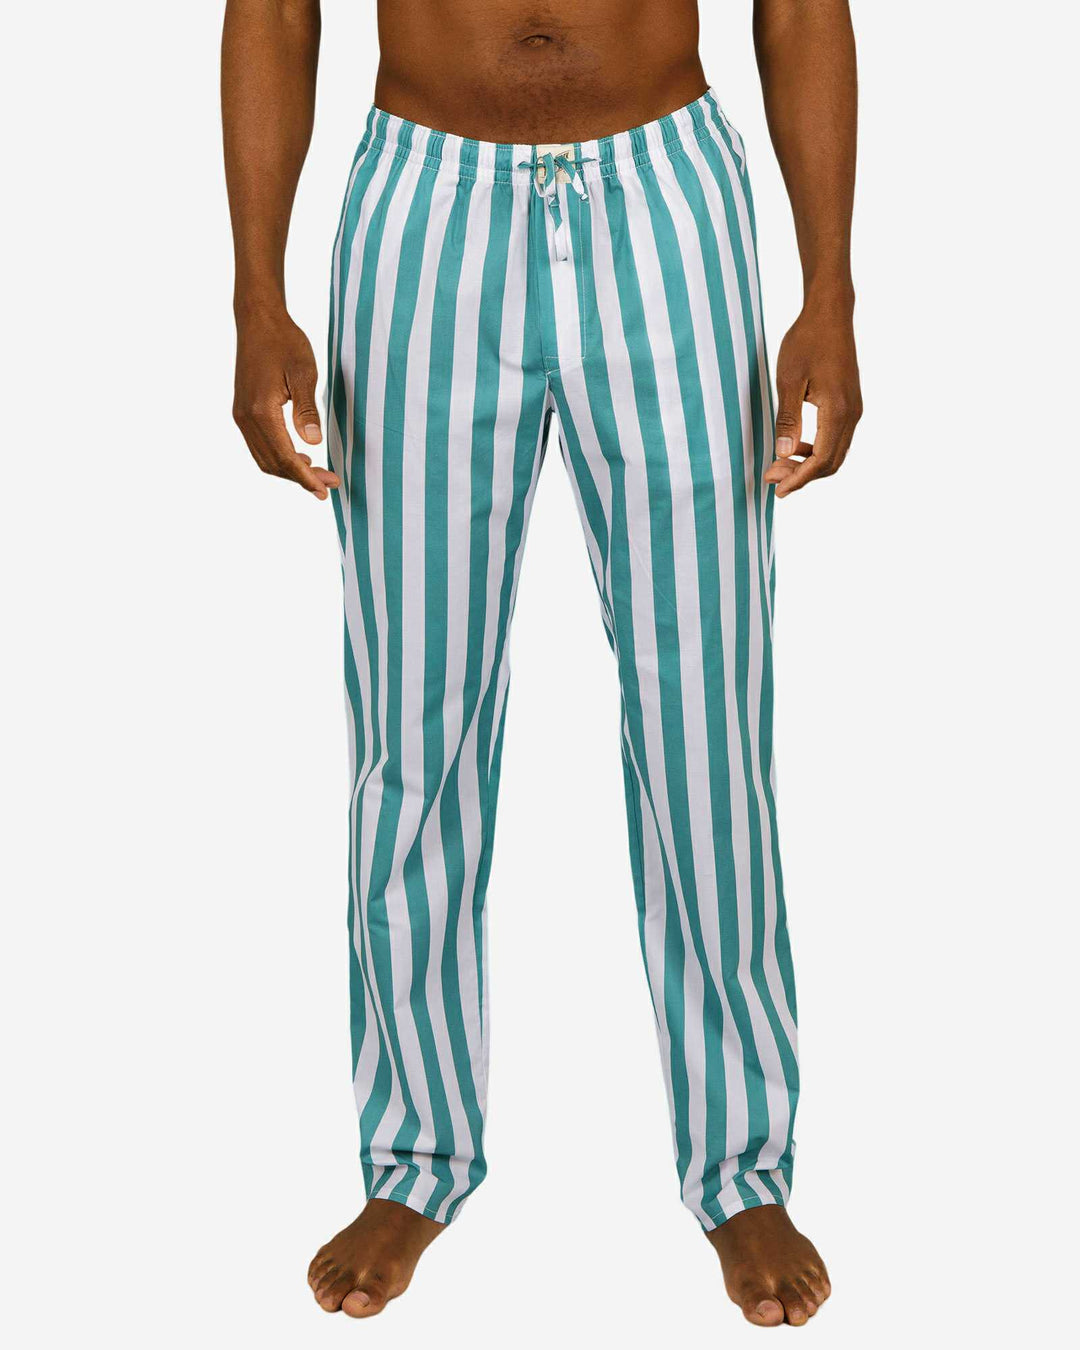 Mens pyjama bottoms - white and green stripes